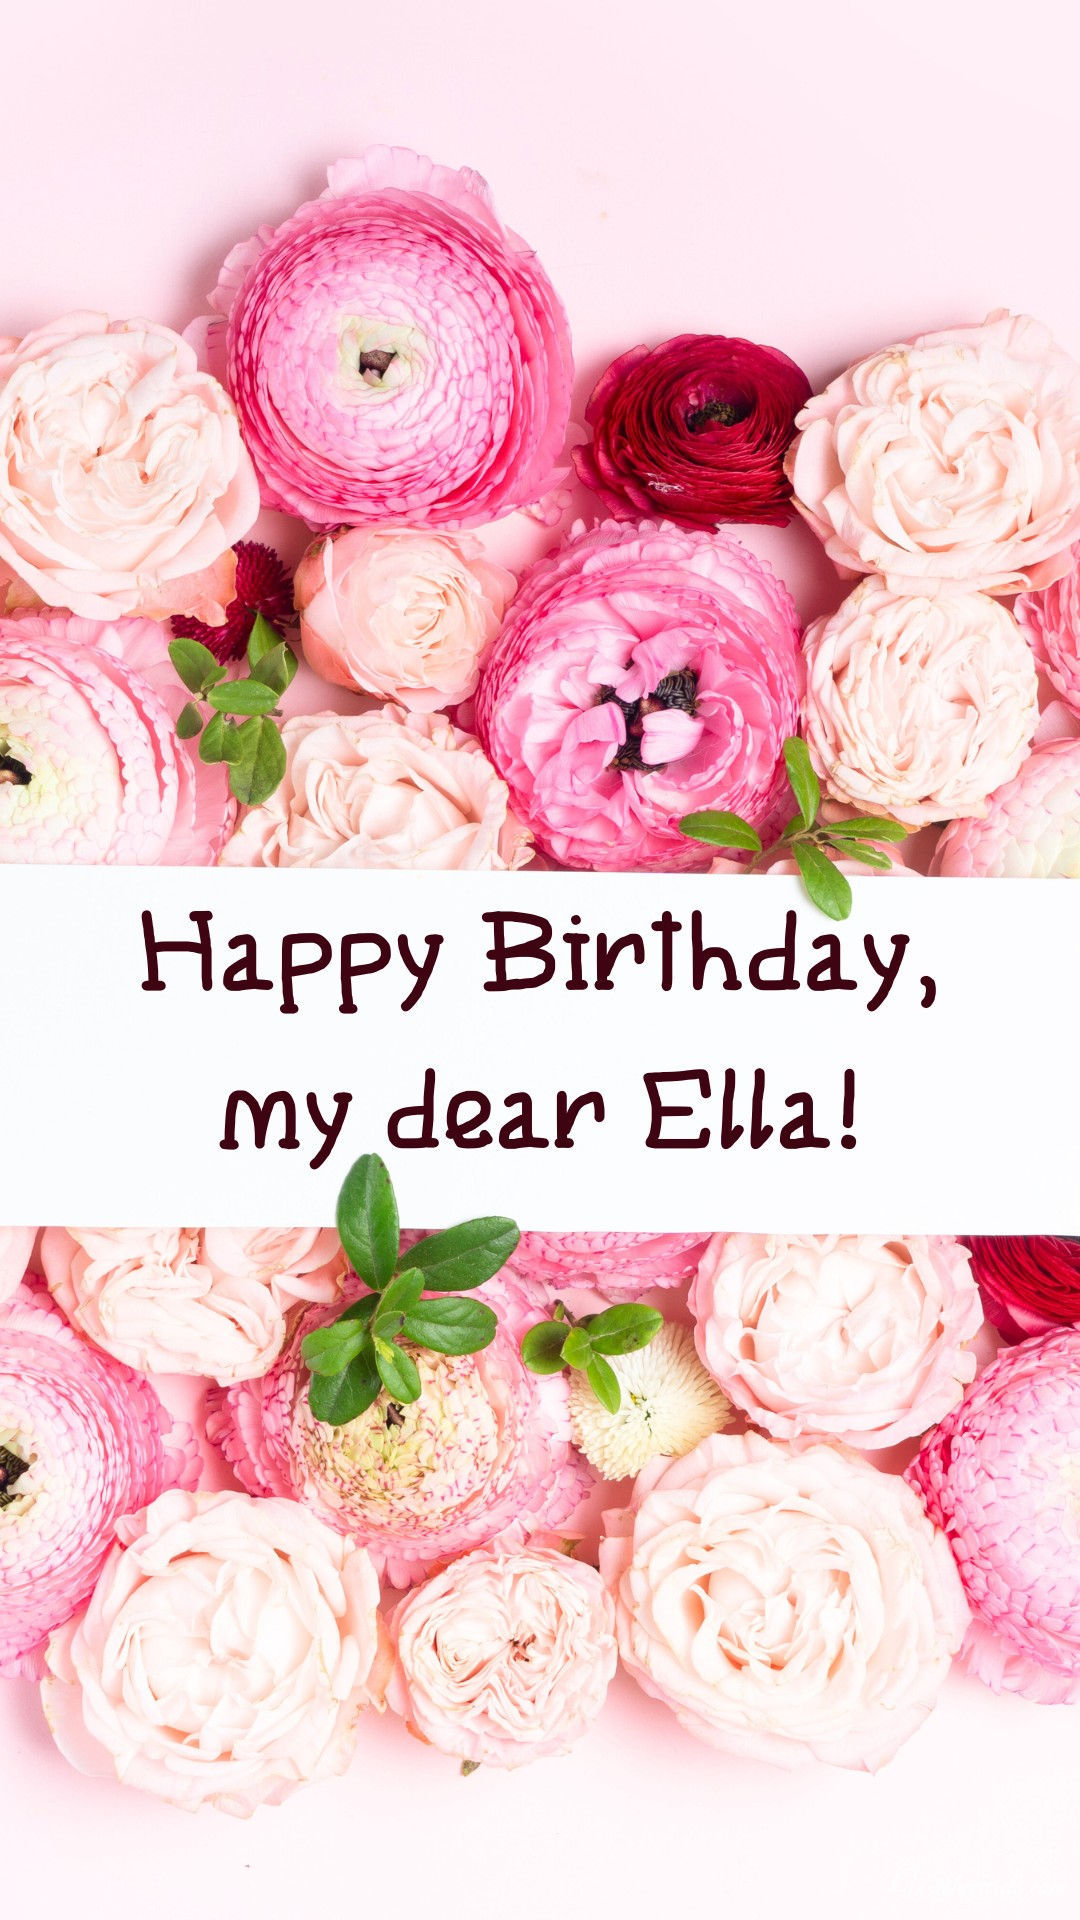 Happy Birthday Ella